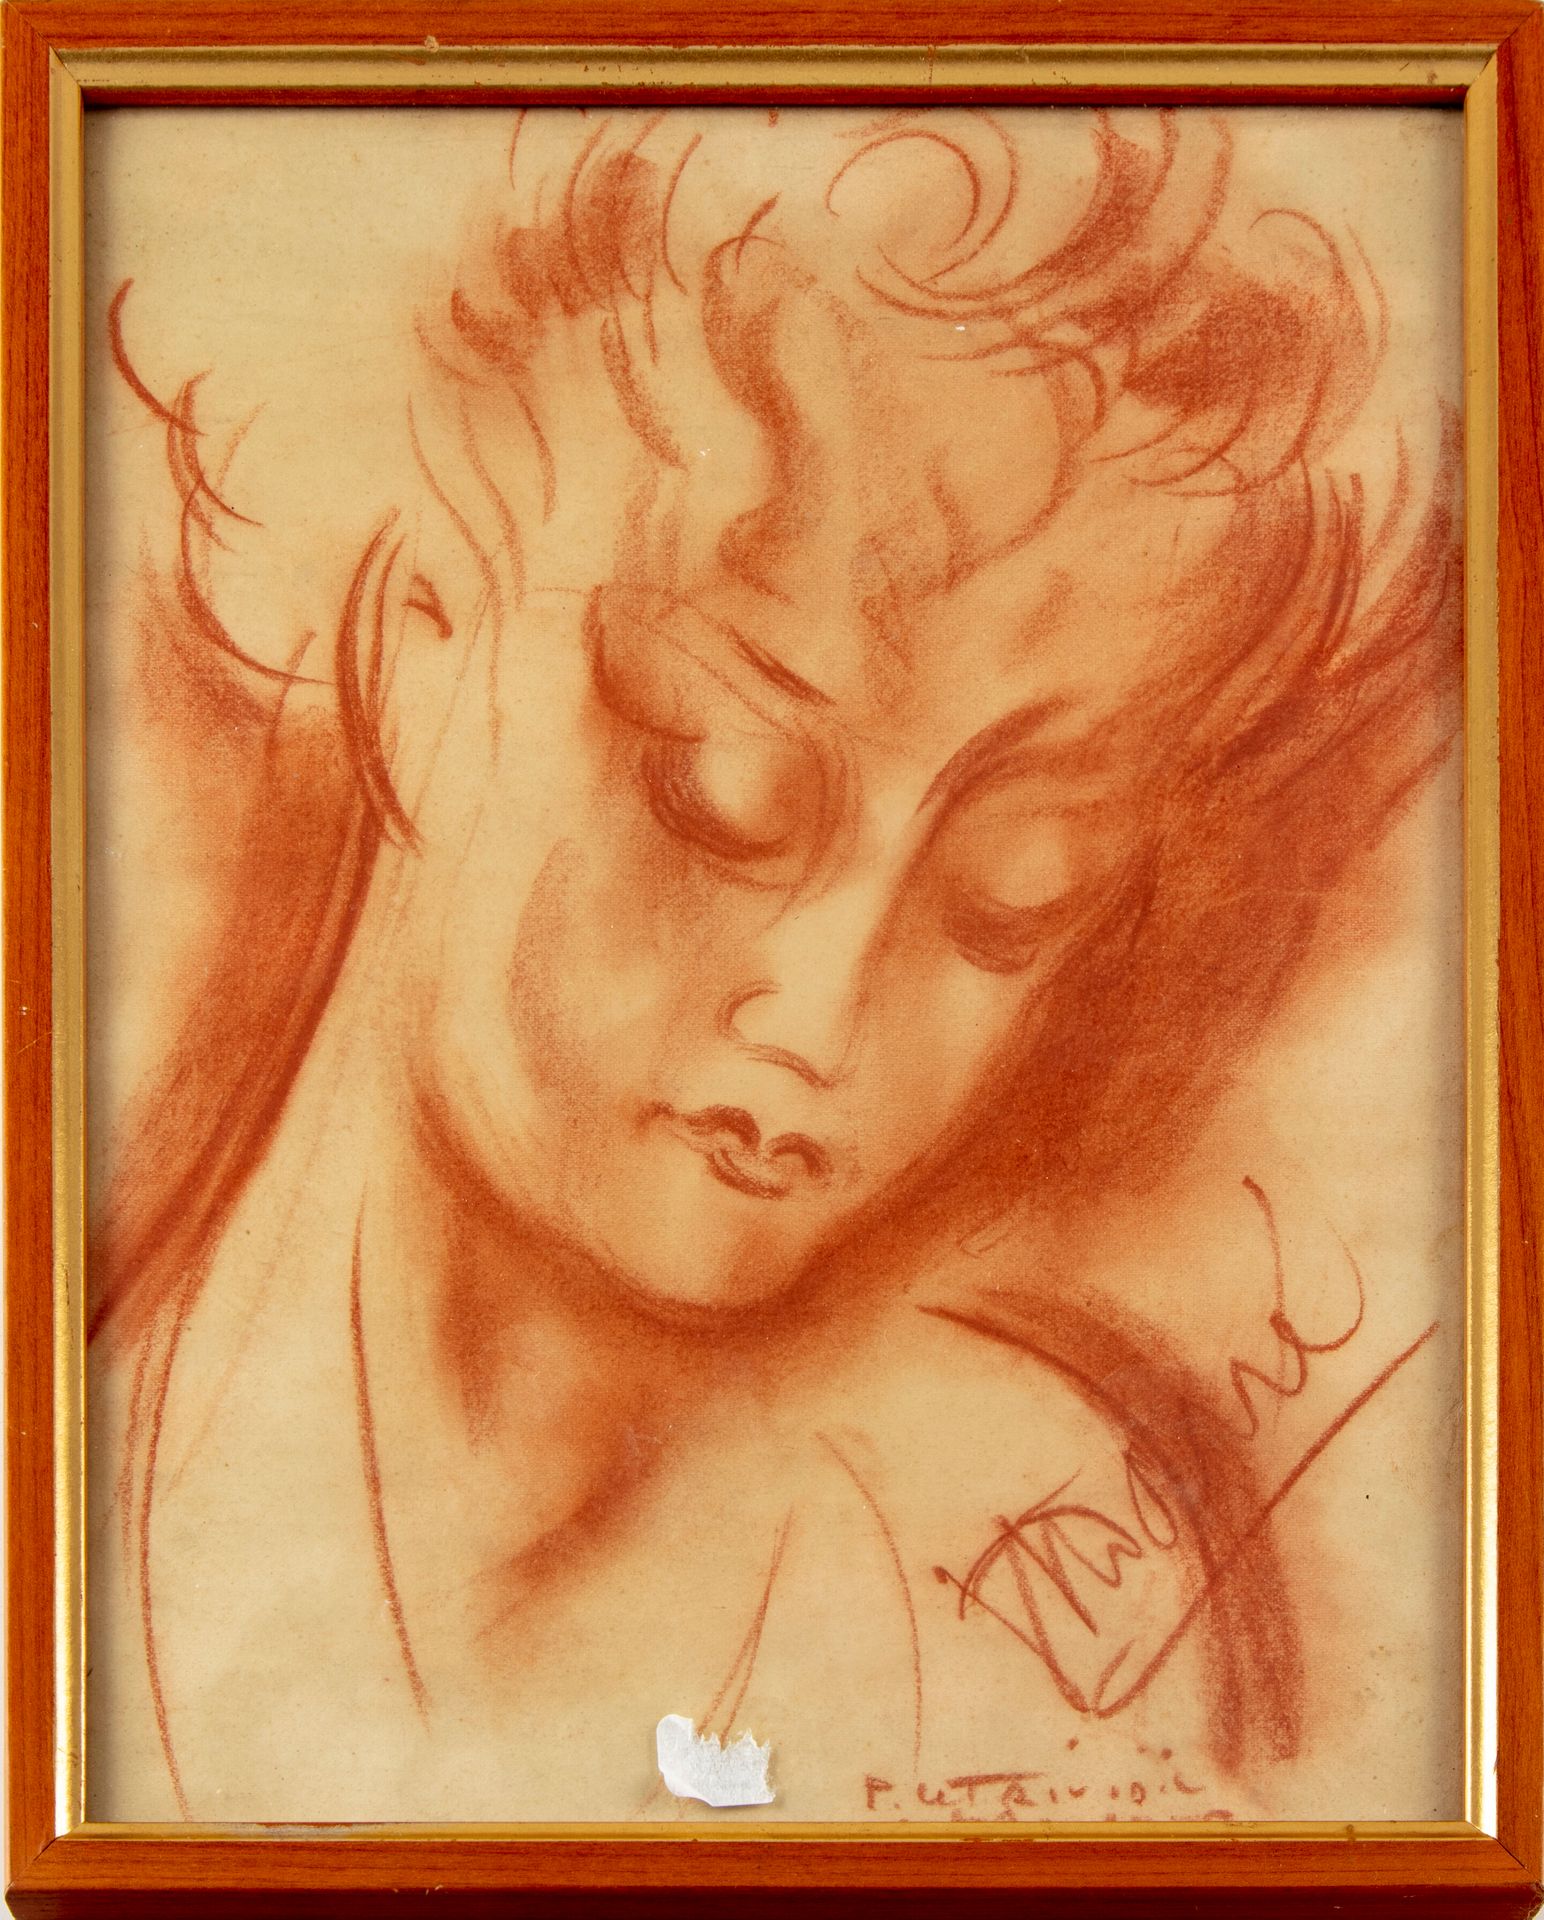 Null 皮埃尔-勒特里维迪克(1898-1960)
一个女人的画像
右下角有签名，日期为1950年10月的 "Sanguine"。
29 x 23 cm